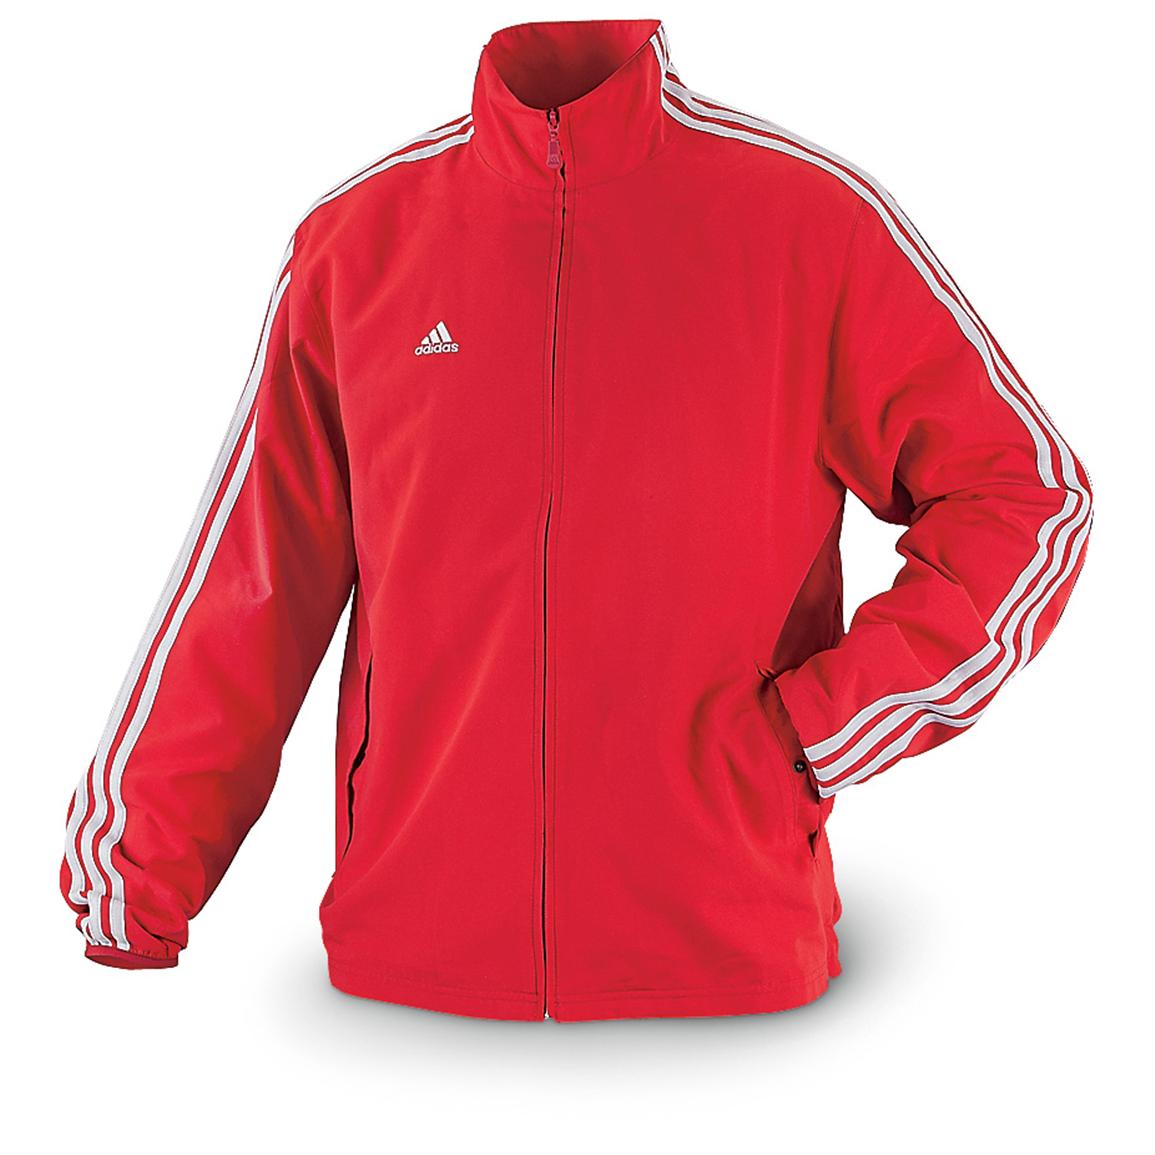 Adidas® Performance Jacket - 303916, Uninsulated Jackets & Coats at